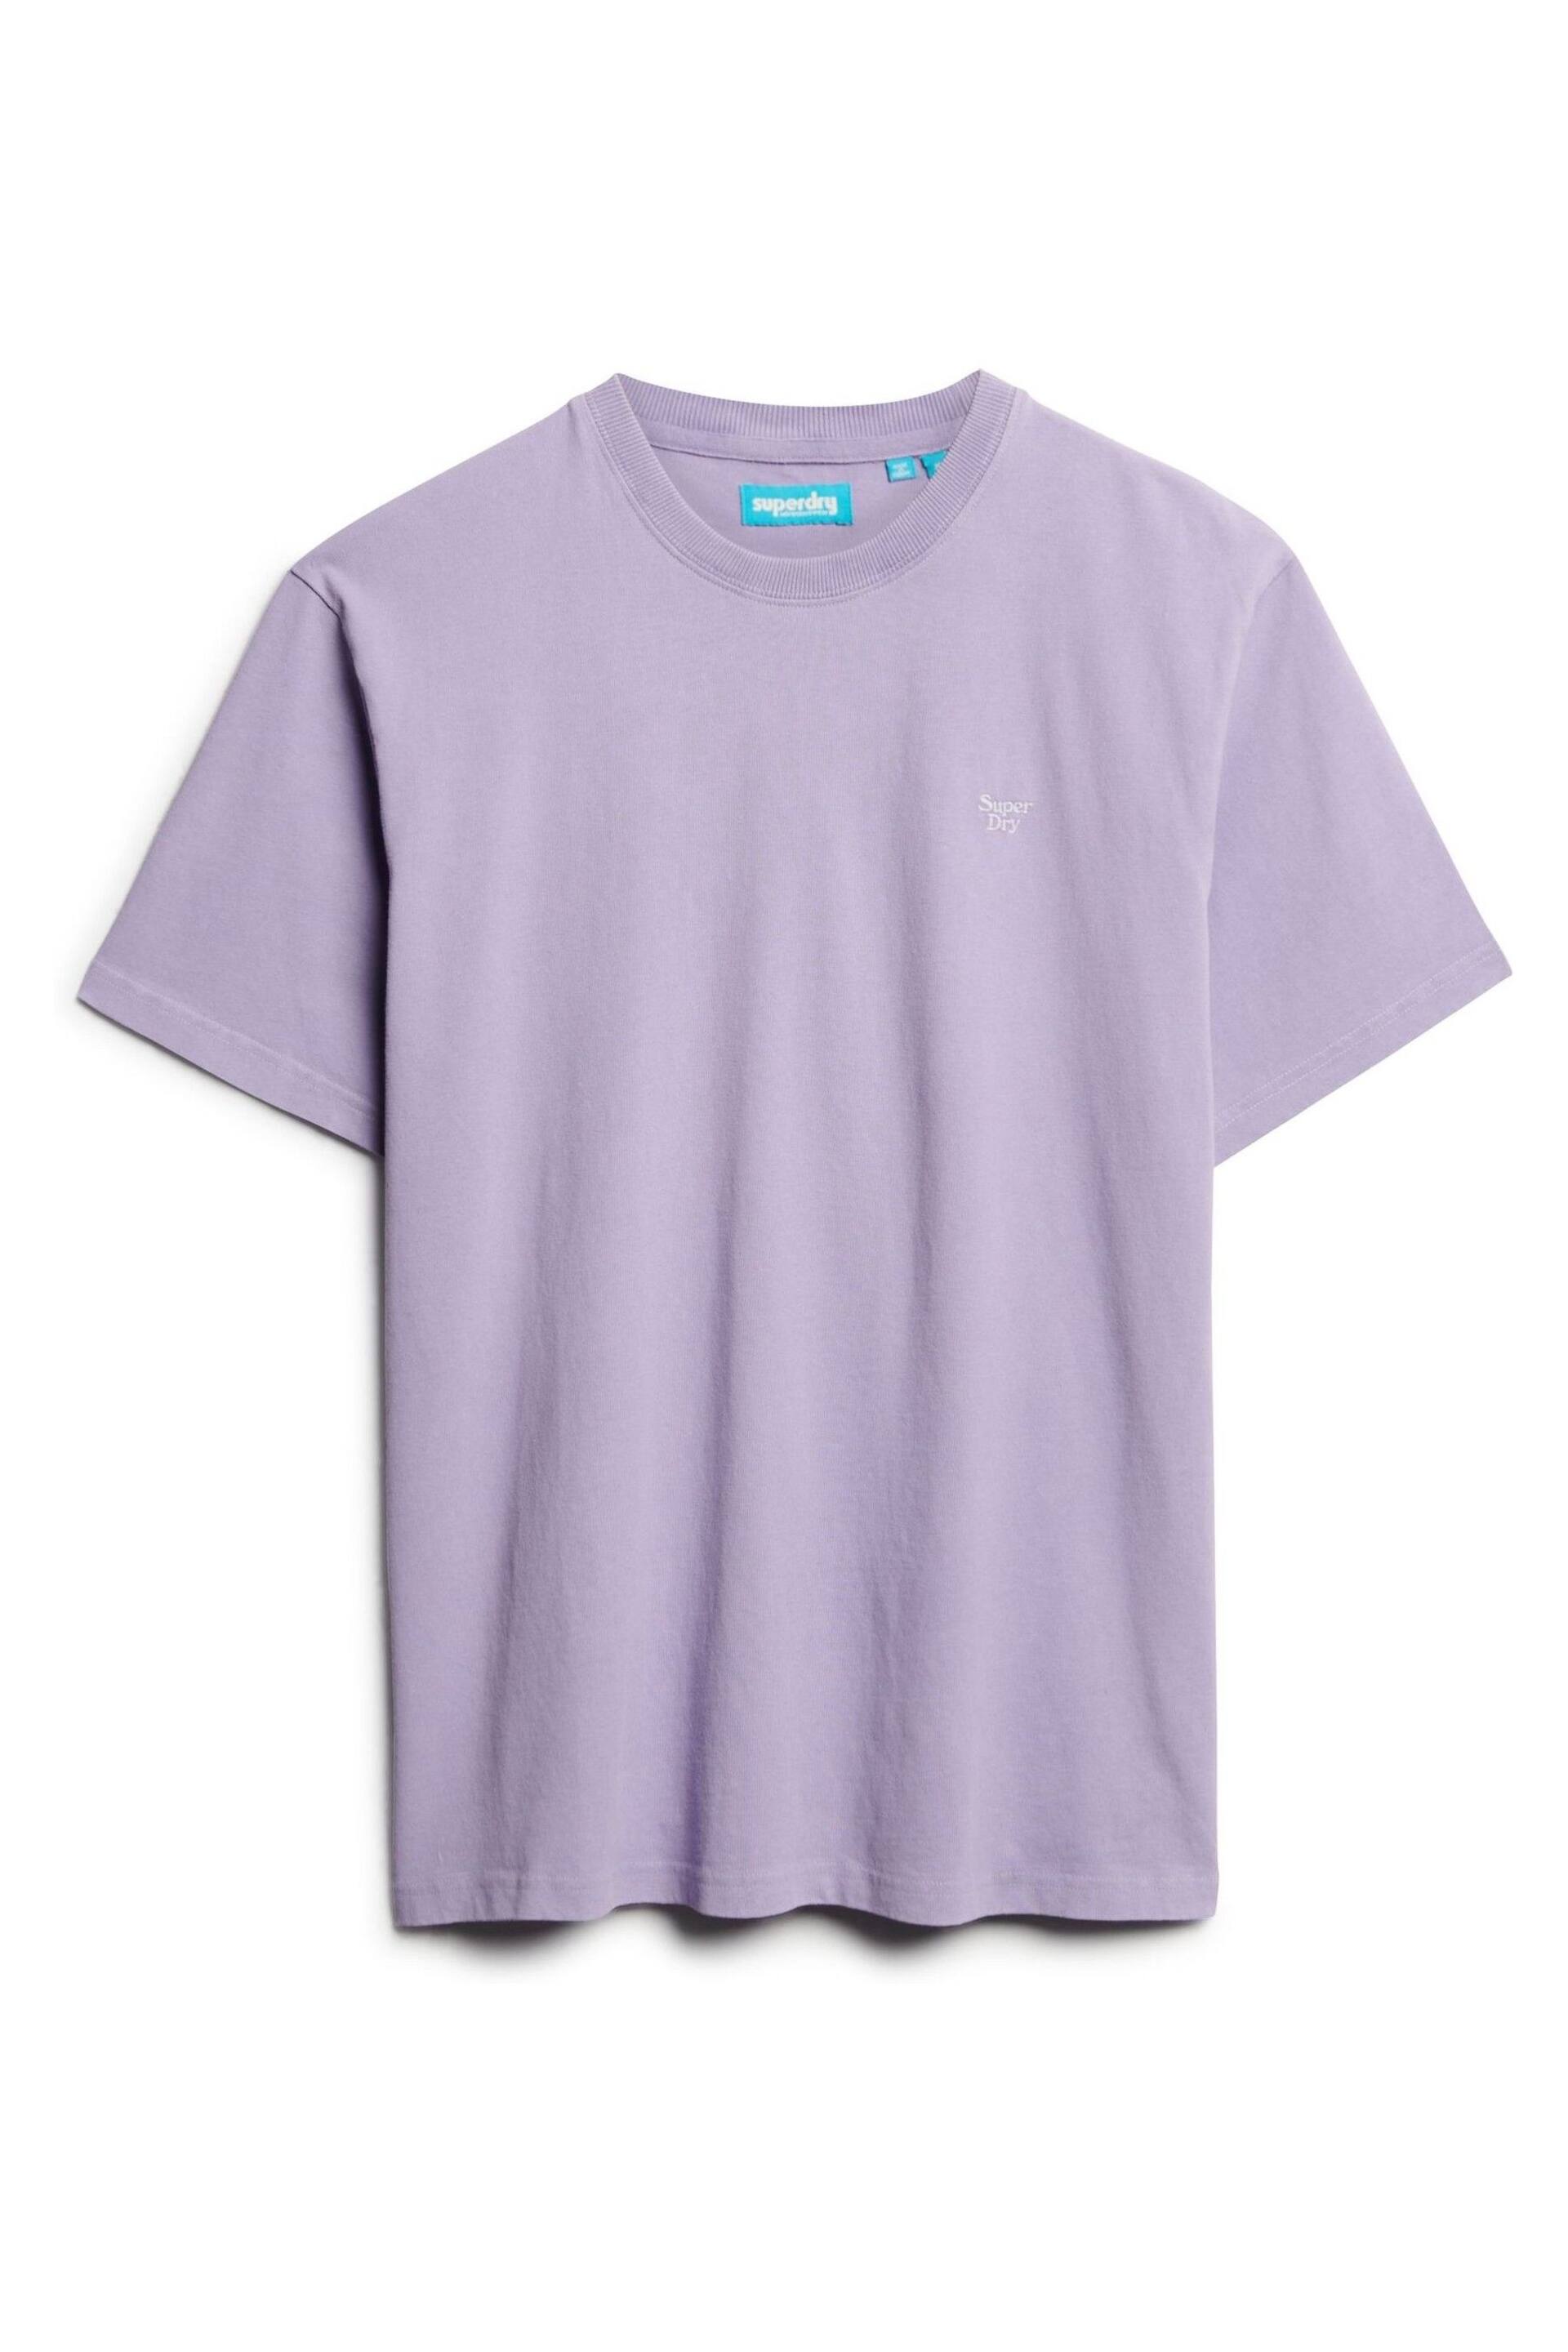 Superdry Purple Vintage Washed T-Shirt - Image 4 of 5